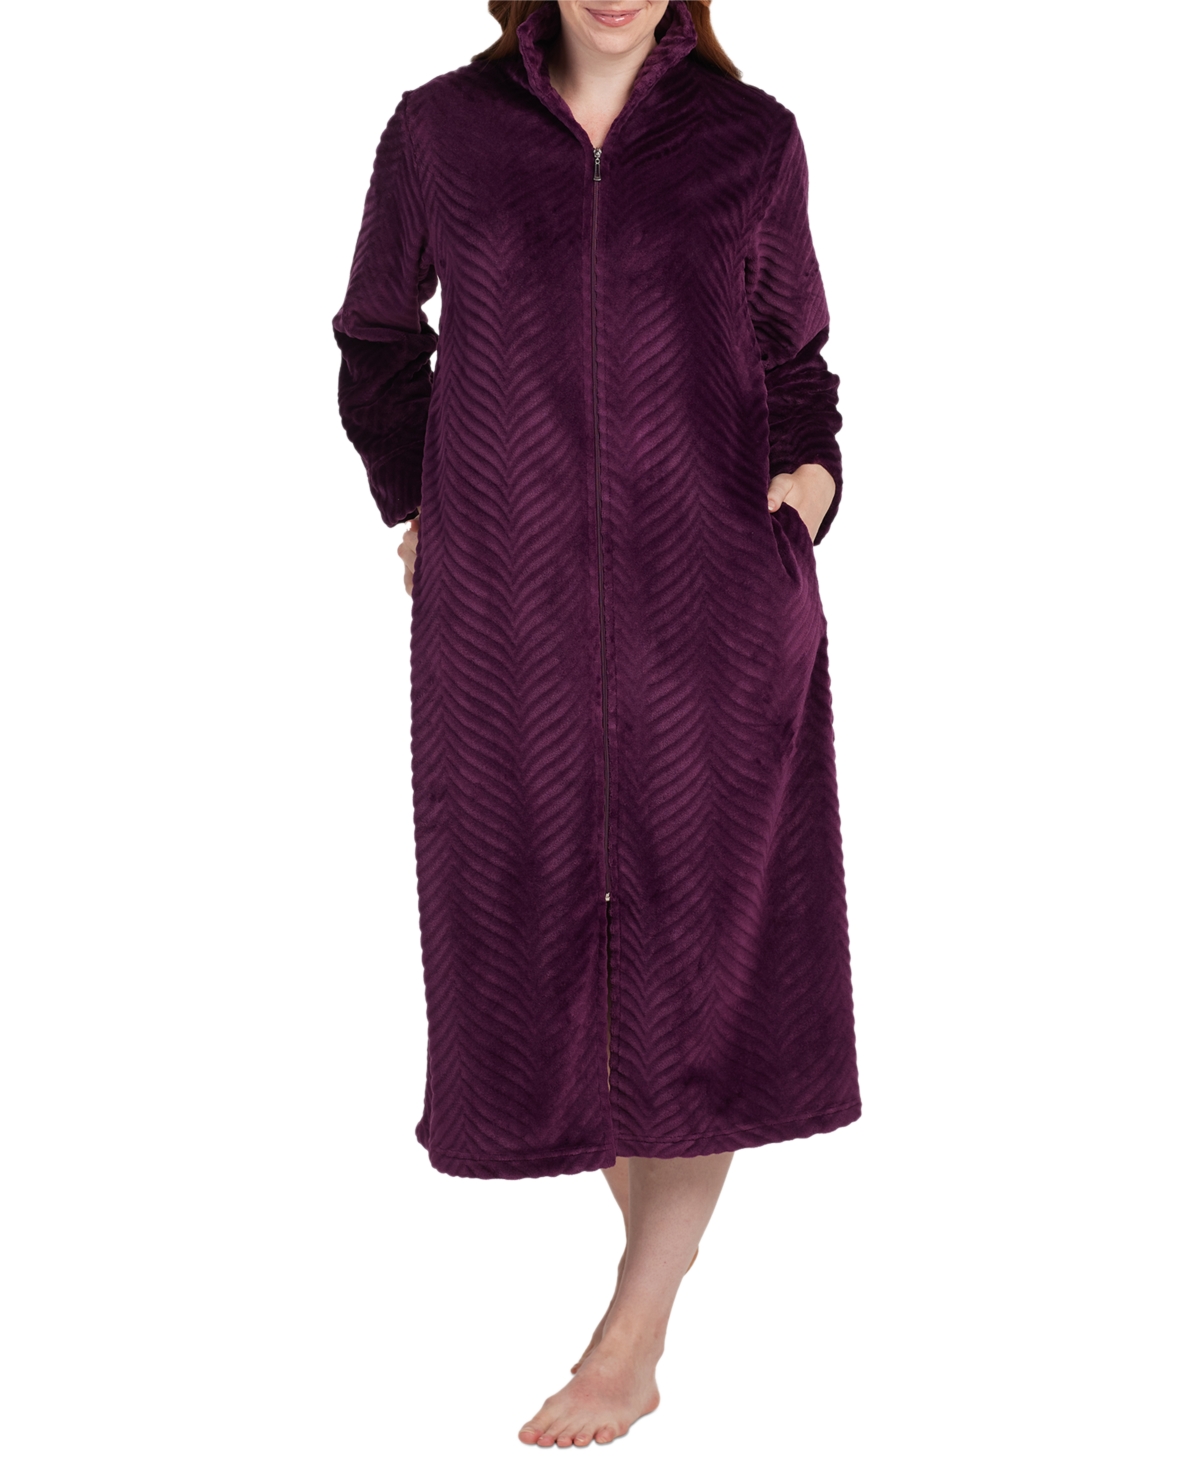 Women's Textured Zip-Front Robe - Aubergine